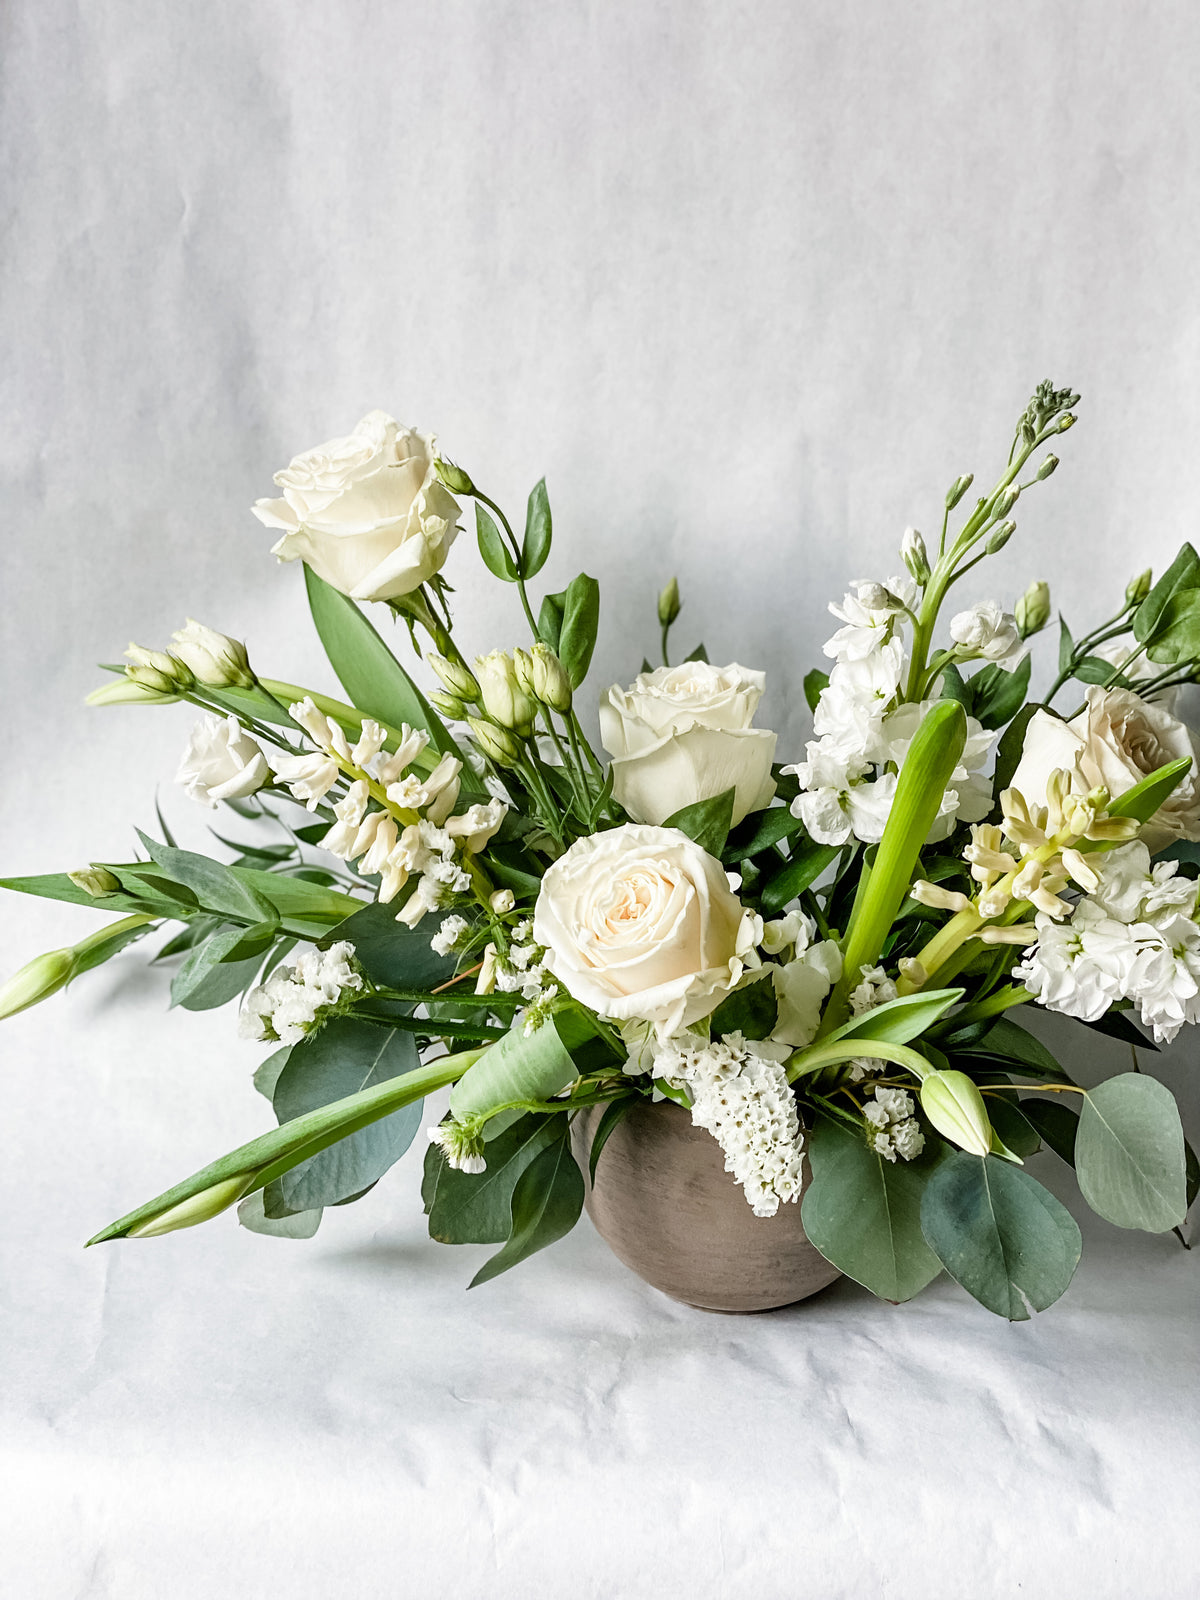 Beautiful seasonal vase arrangement of neutrals and ivory blooms